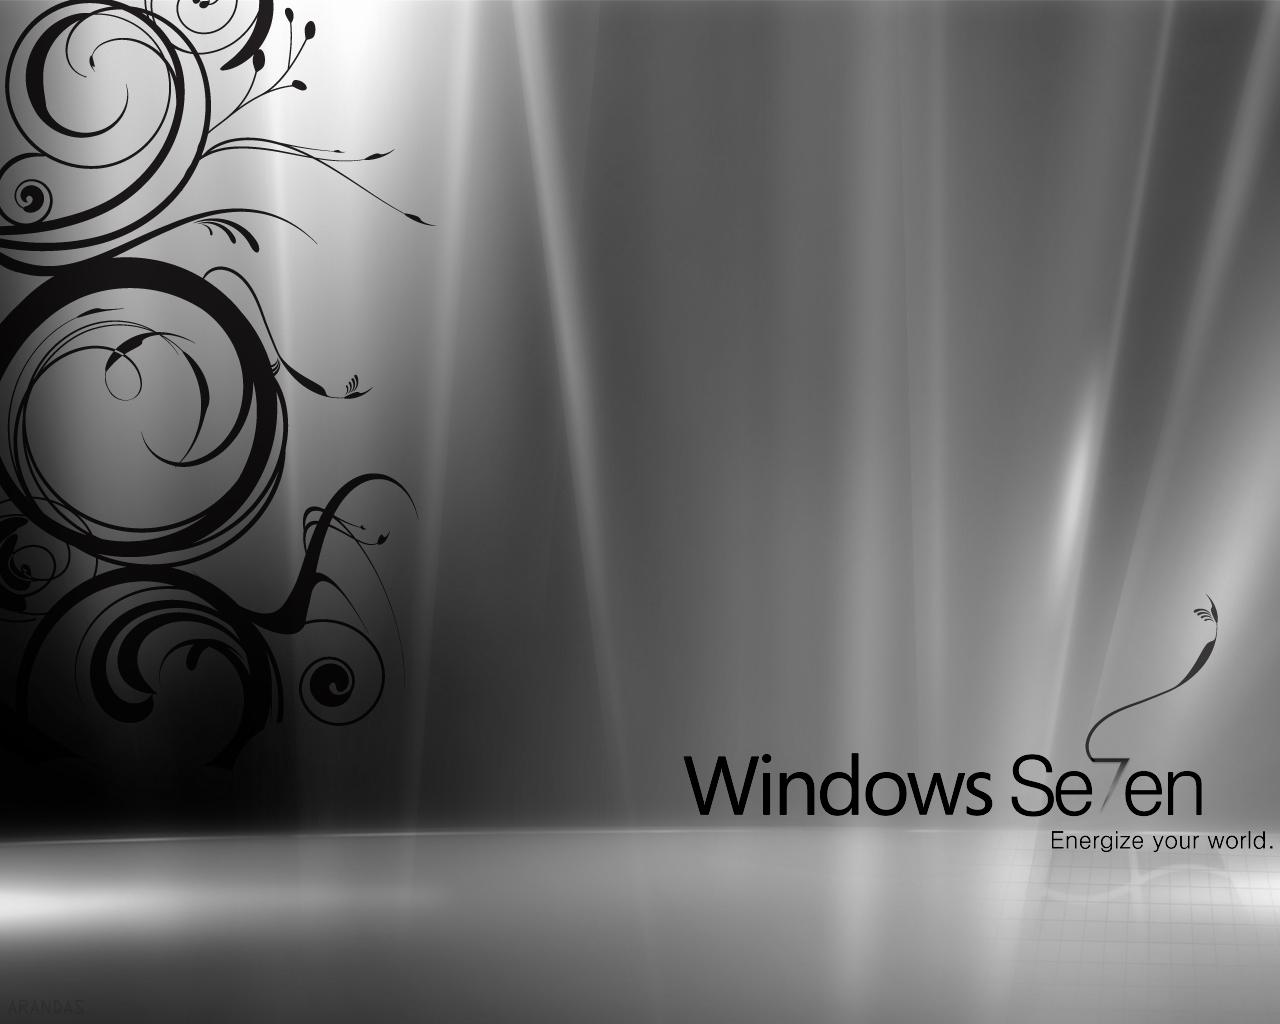 Windows7 Wallpapers (12-12-2008)